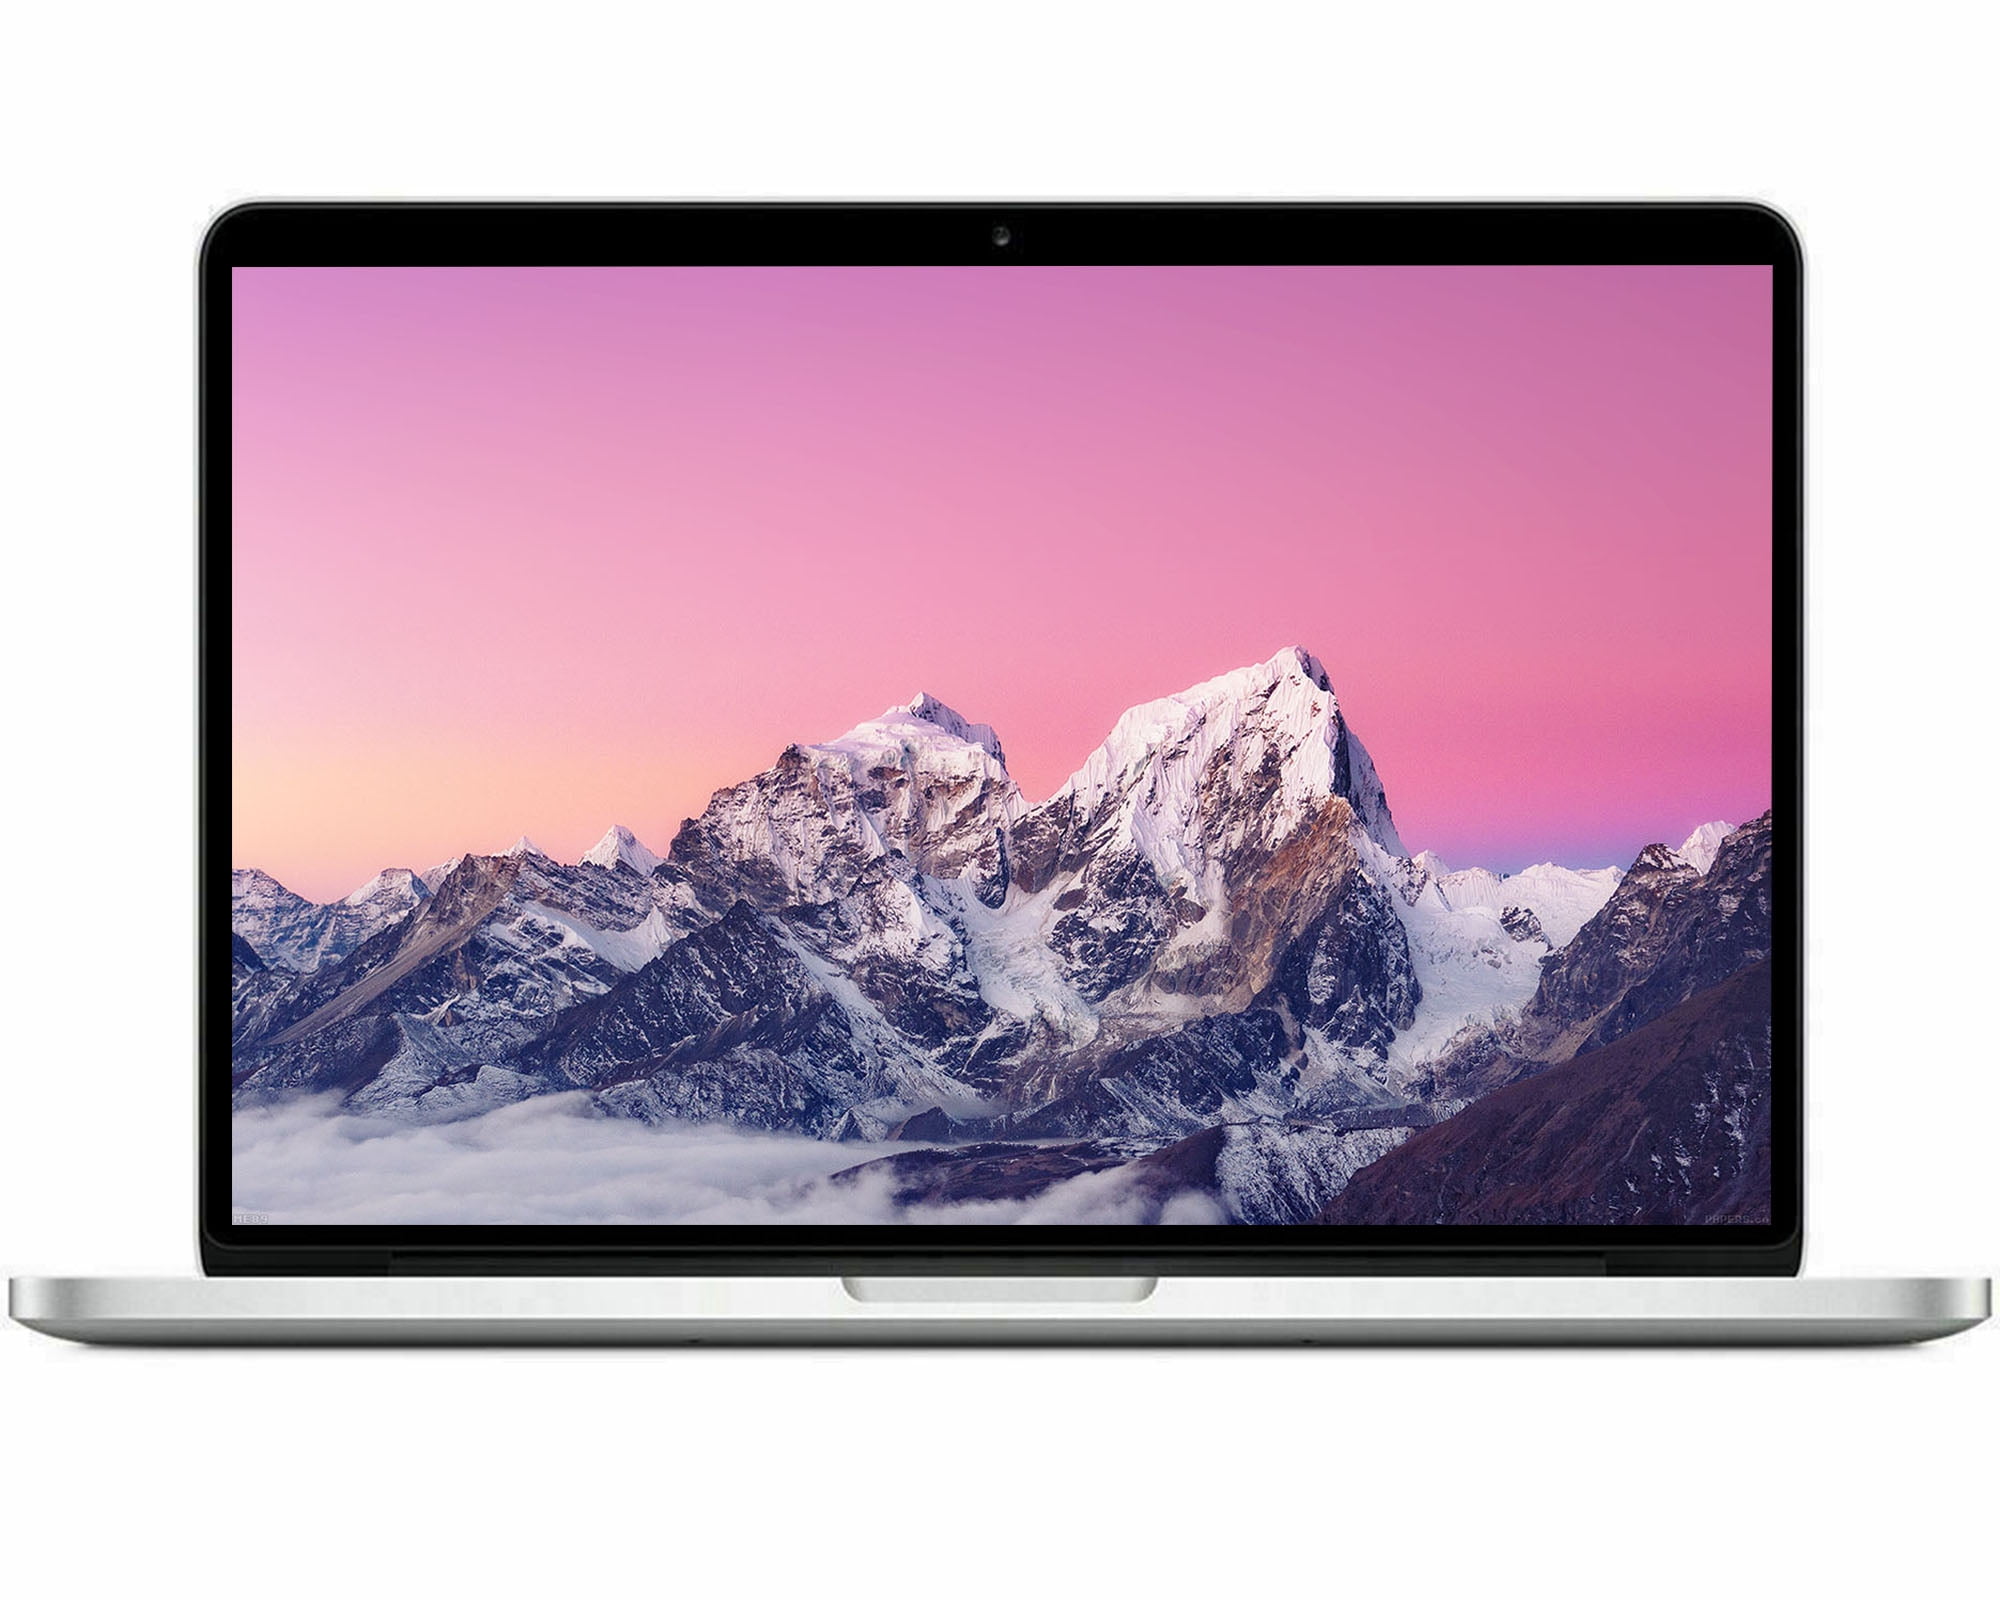 Apple 13.3 macbook pro with retina display mf839ll/a used log splitter sale